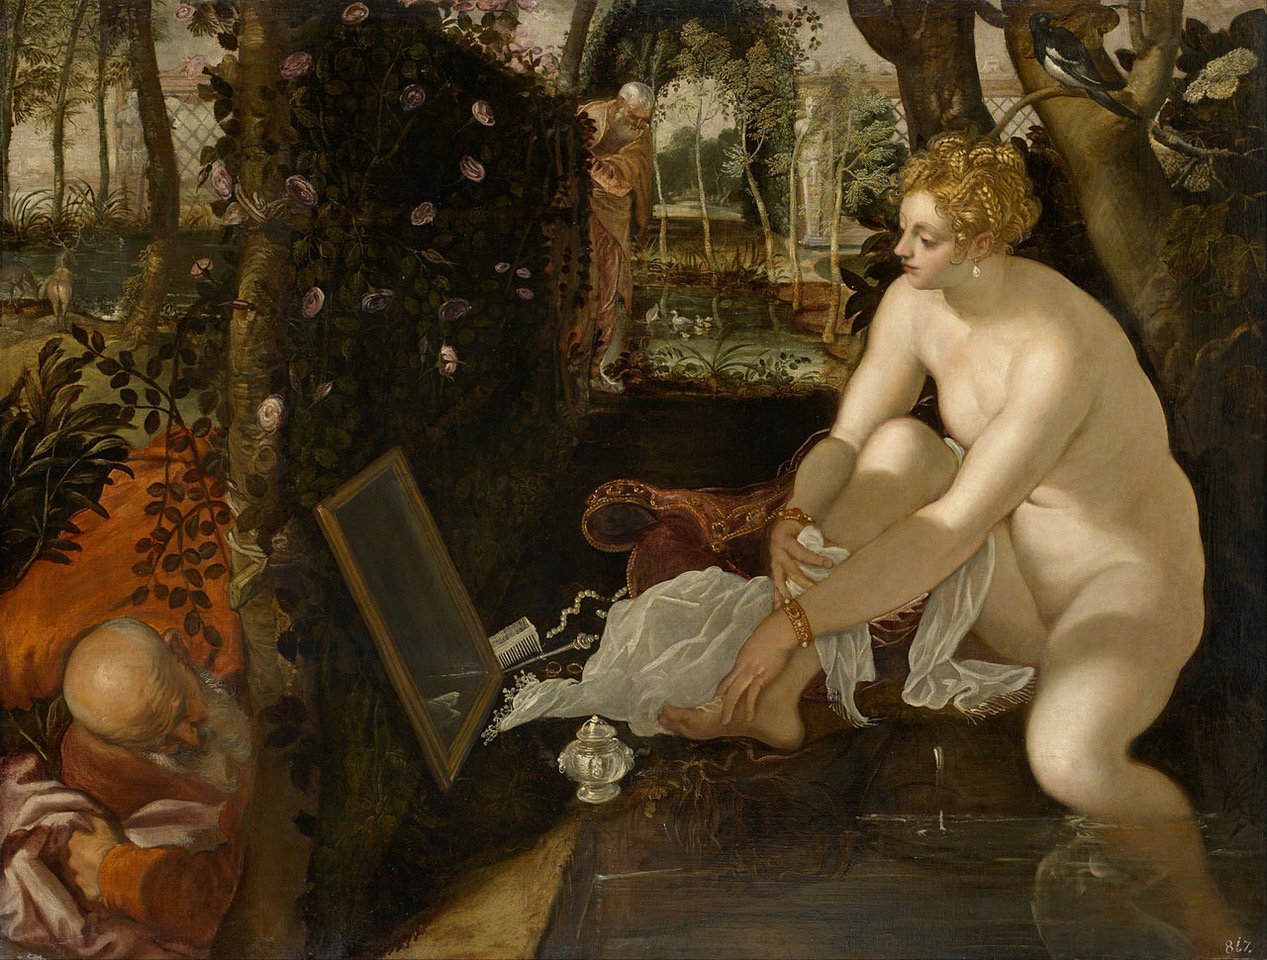 Tintoretto, Susanna e i Vecchioni, KHM Vienna